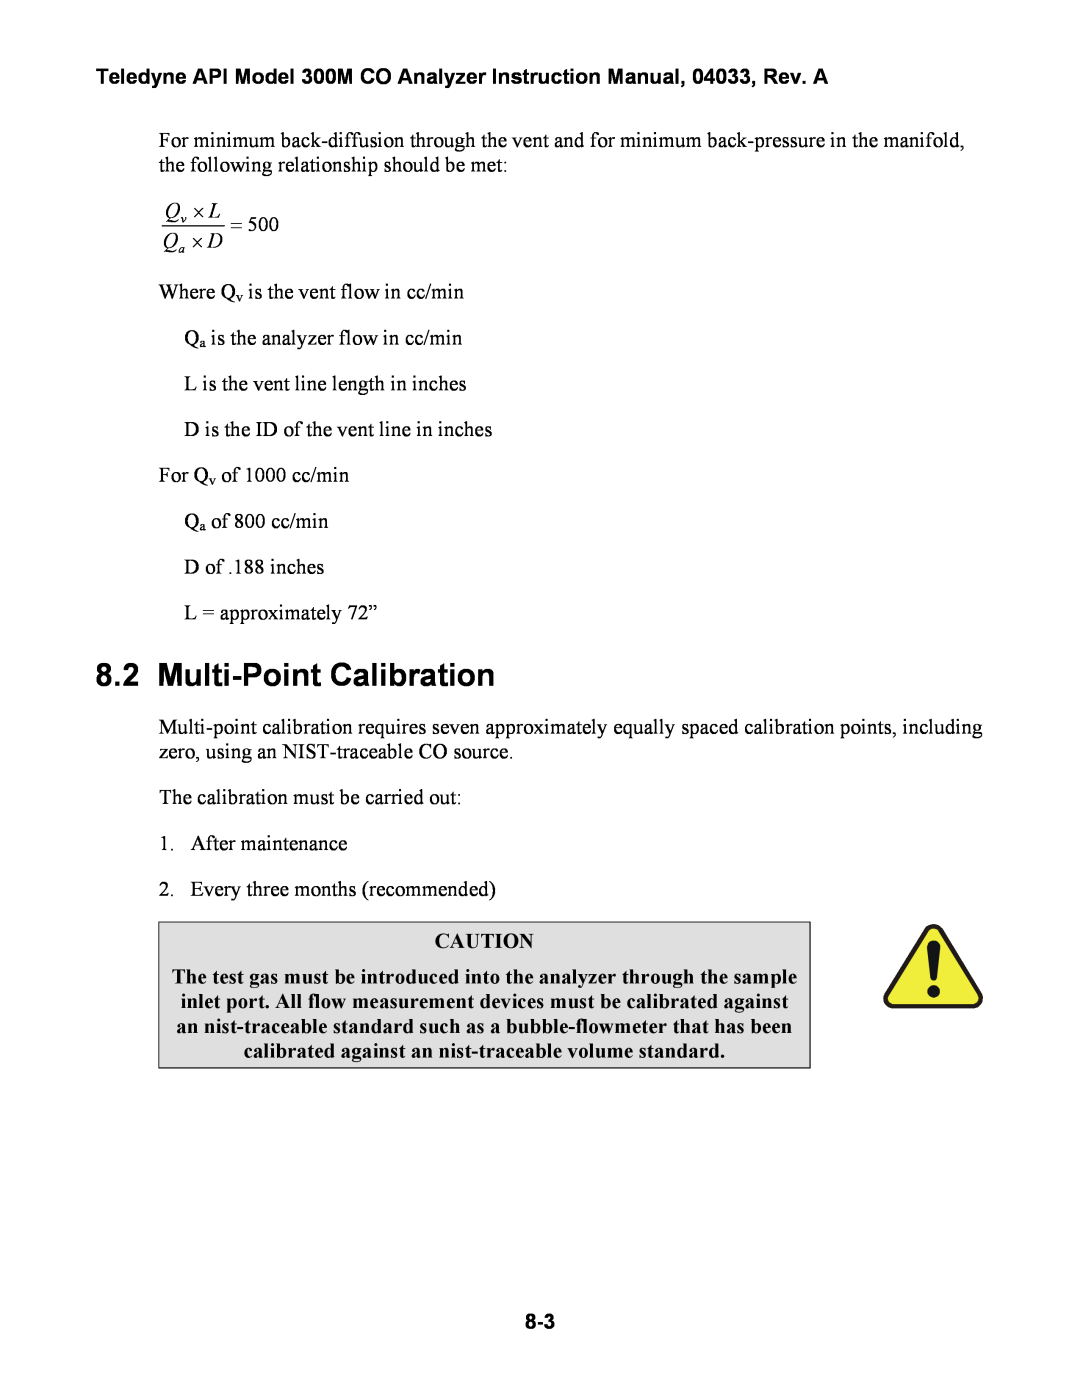 Teledyne 300M instruction manual Multi-PointCalibration, Qv × L = Qa × D 